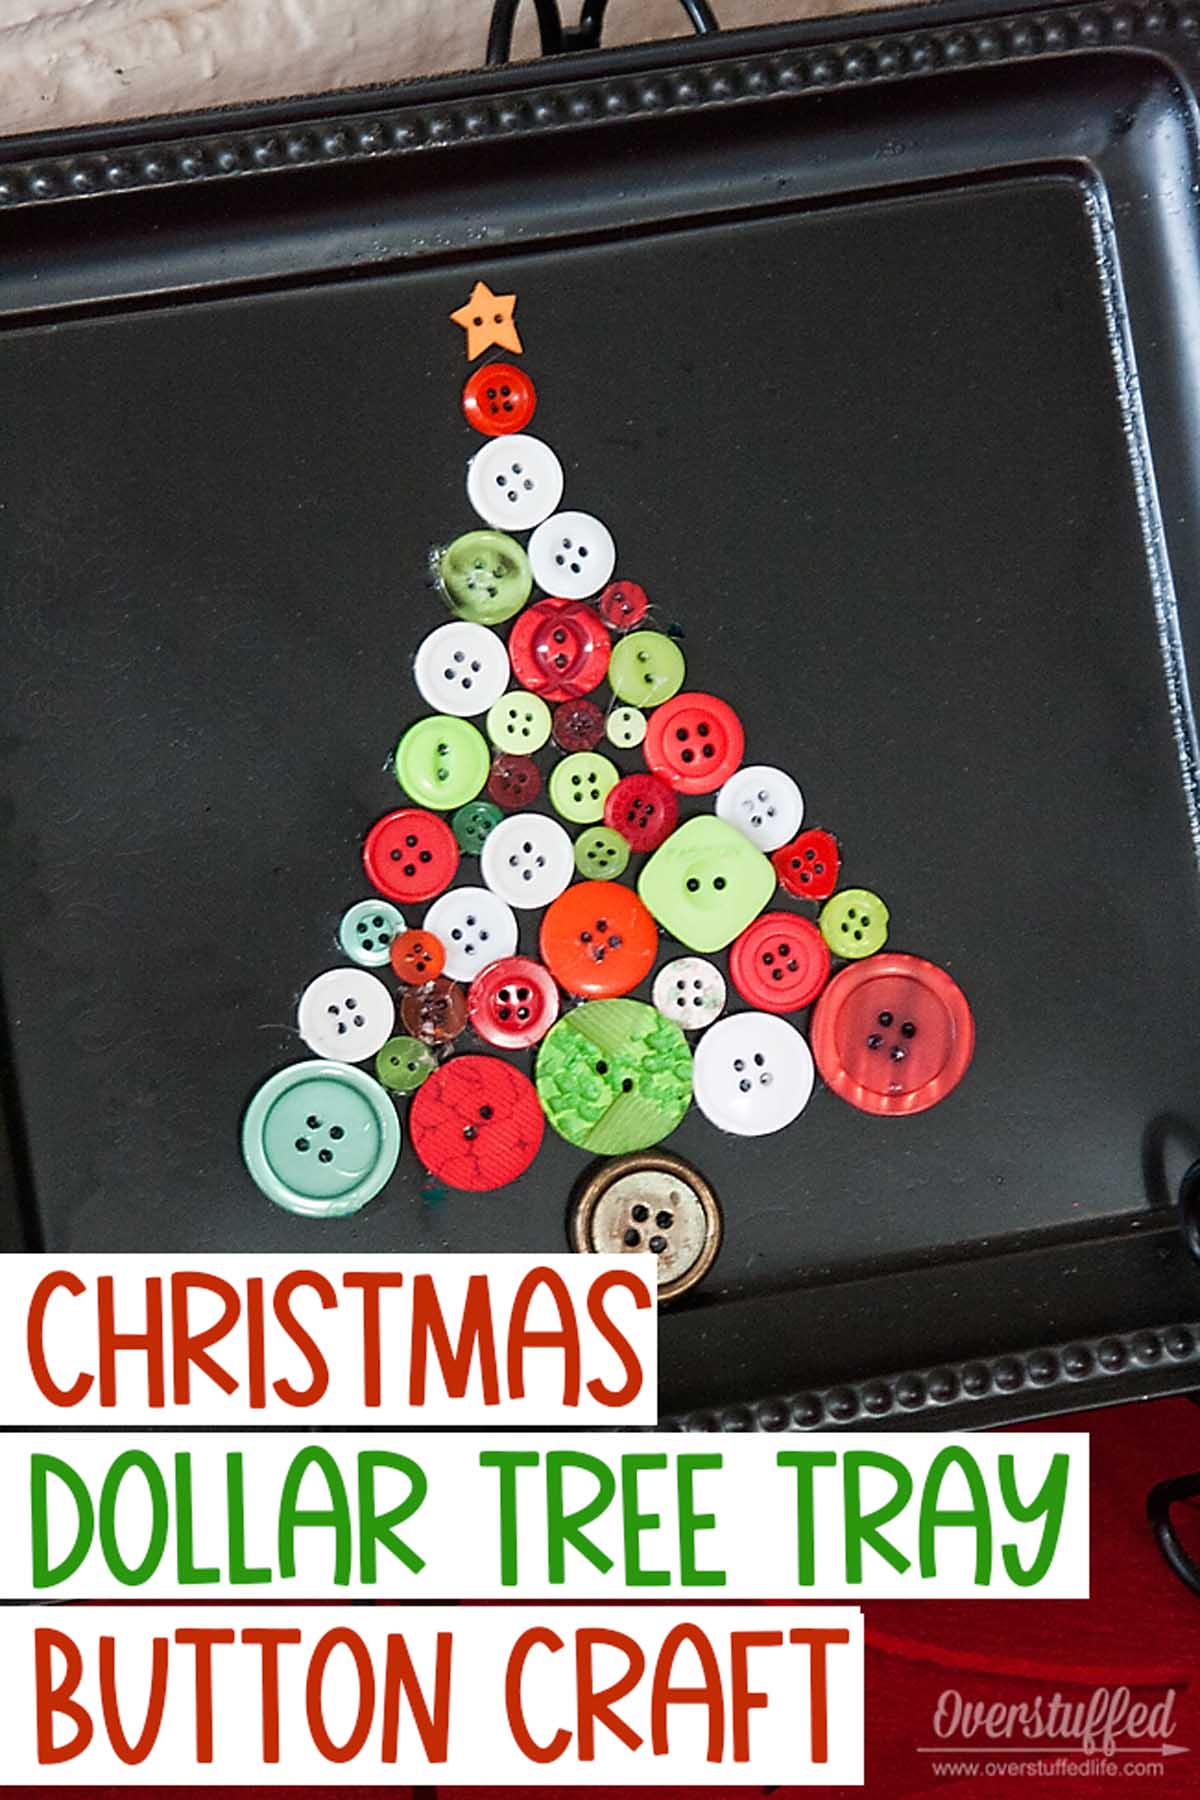 DIY Christmas Button Art on Dollar Tree Tray via @lara_neves